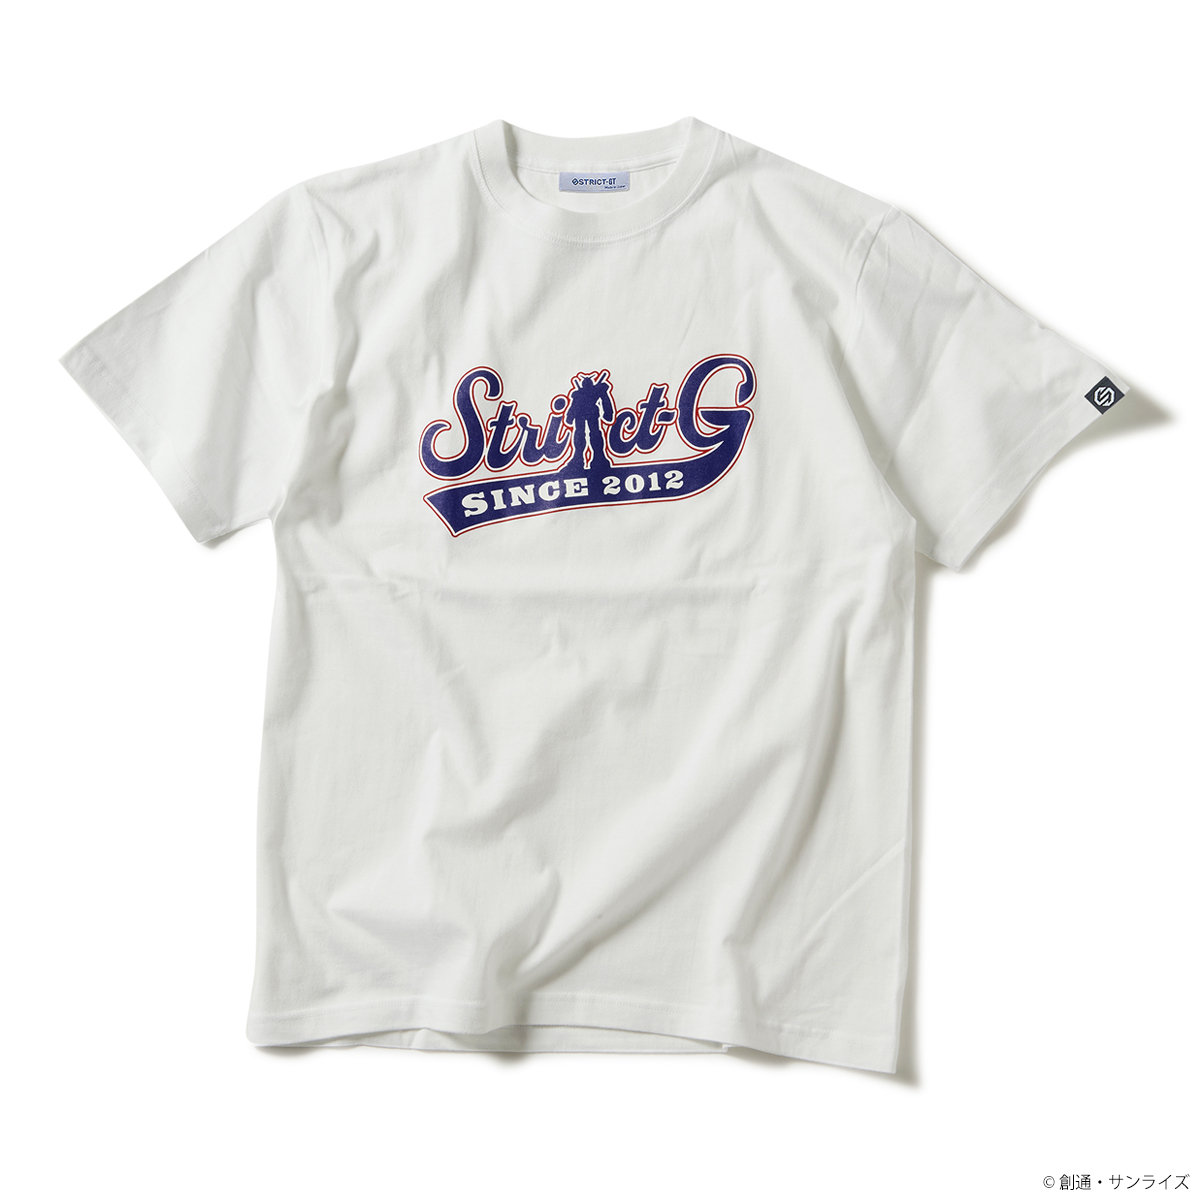 STRICT-G Logo T-shirt White